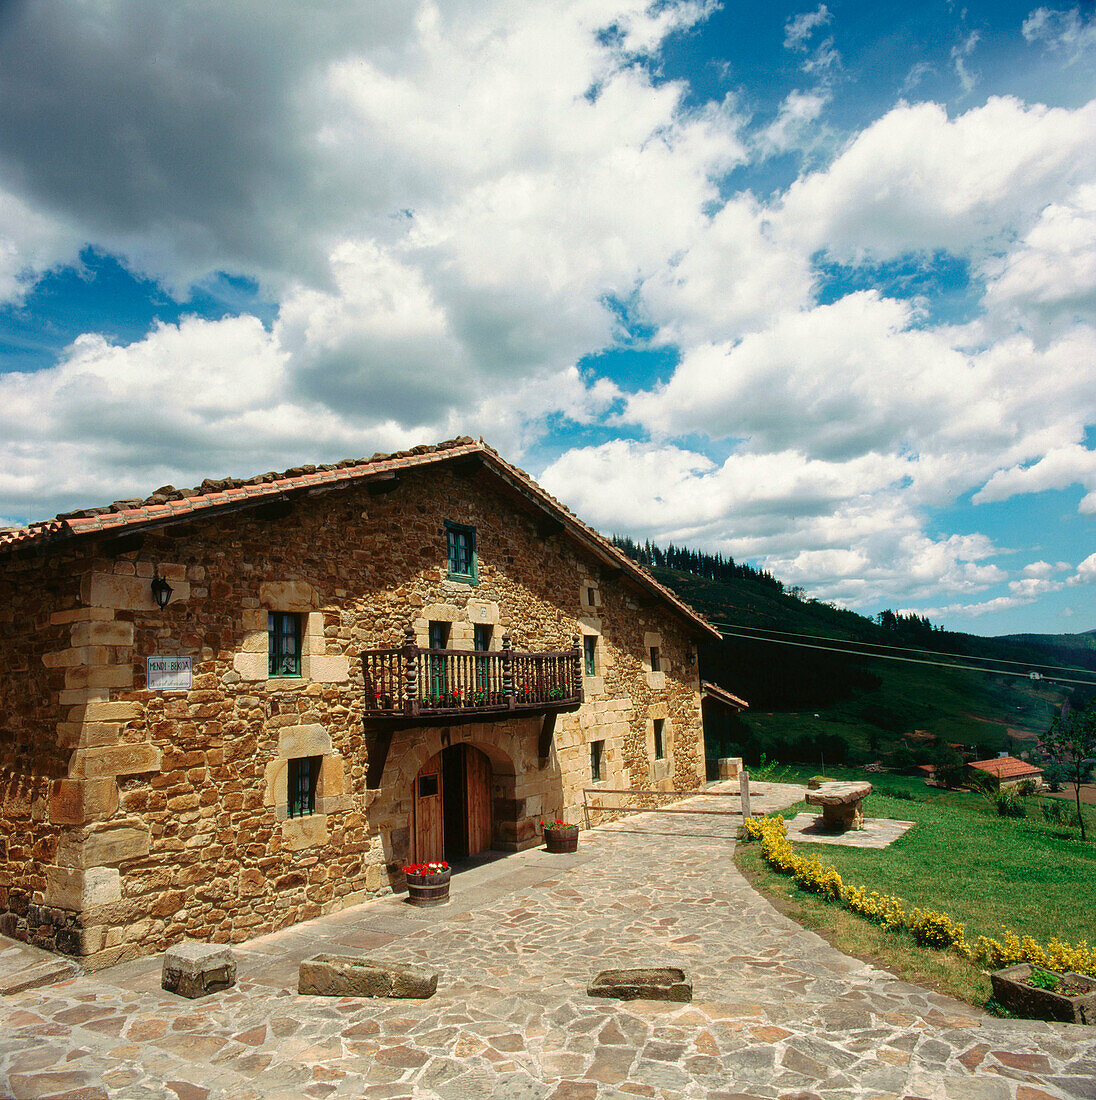 Venta Mendi Bekoa (Mendi Bekoa Inn) in Axpe (Atxondo municipality). Biscay. Basque Country. Spain